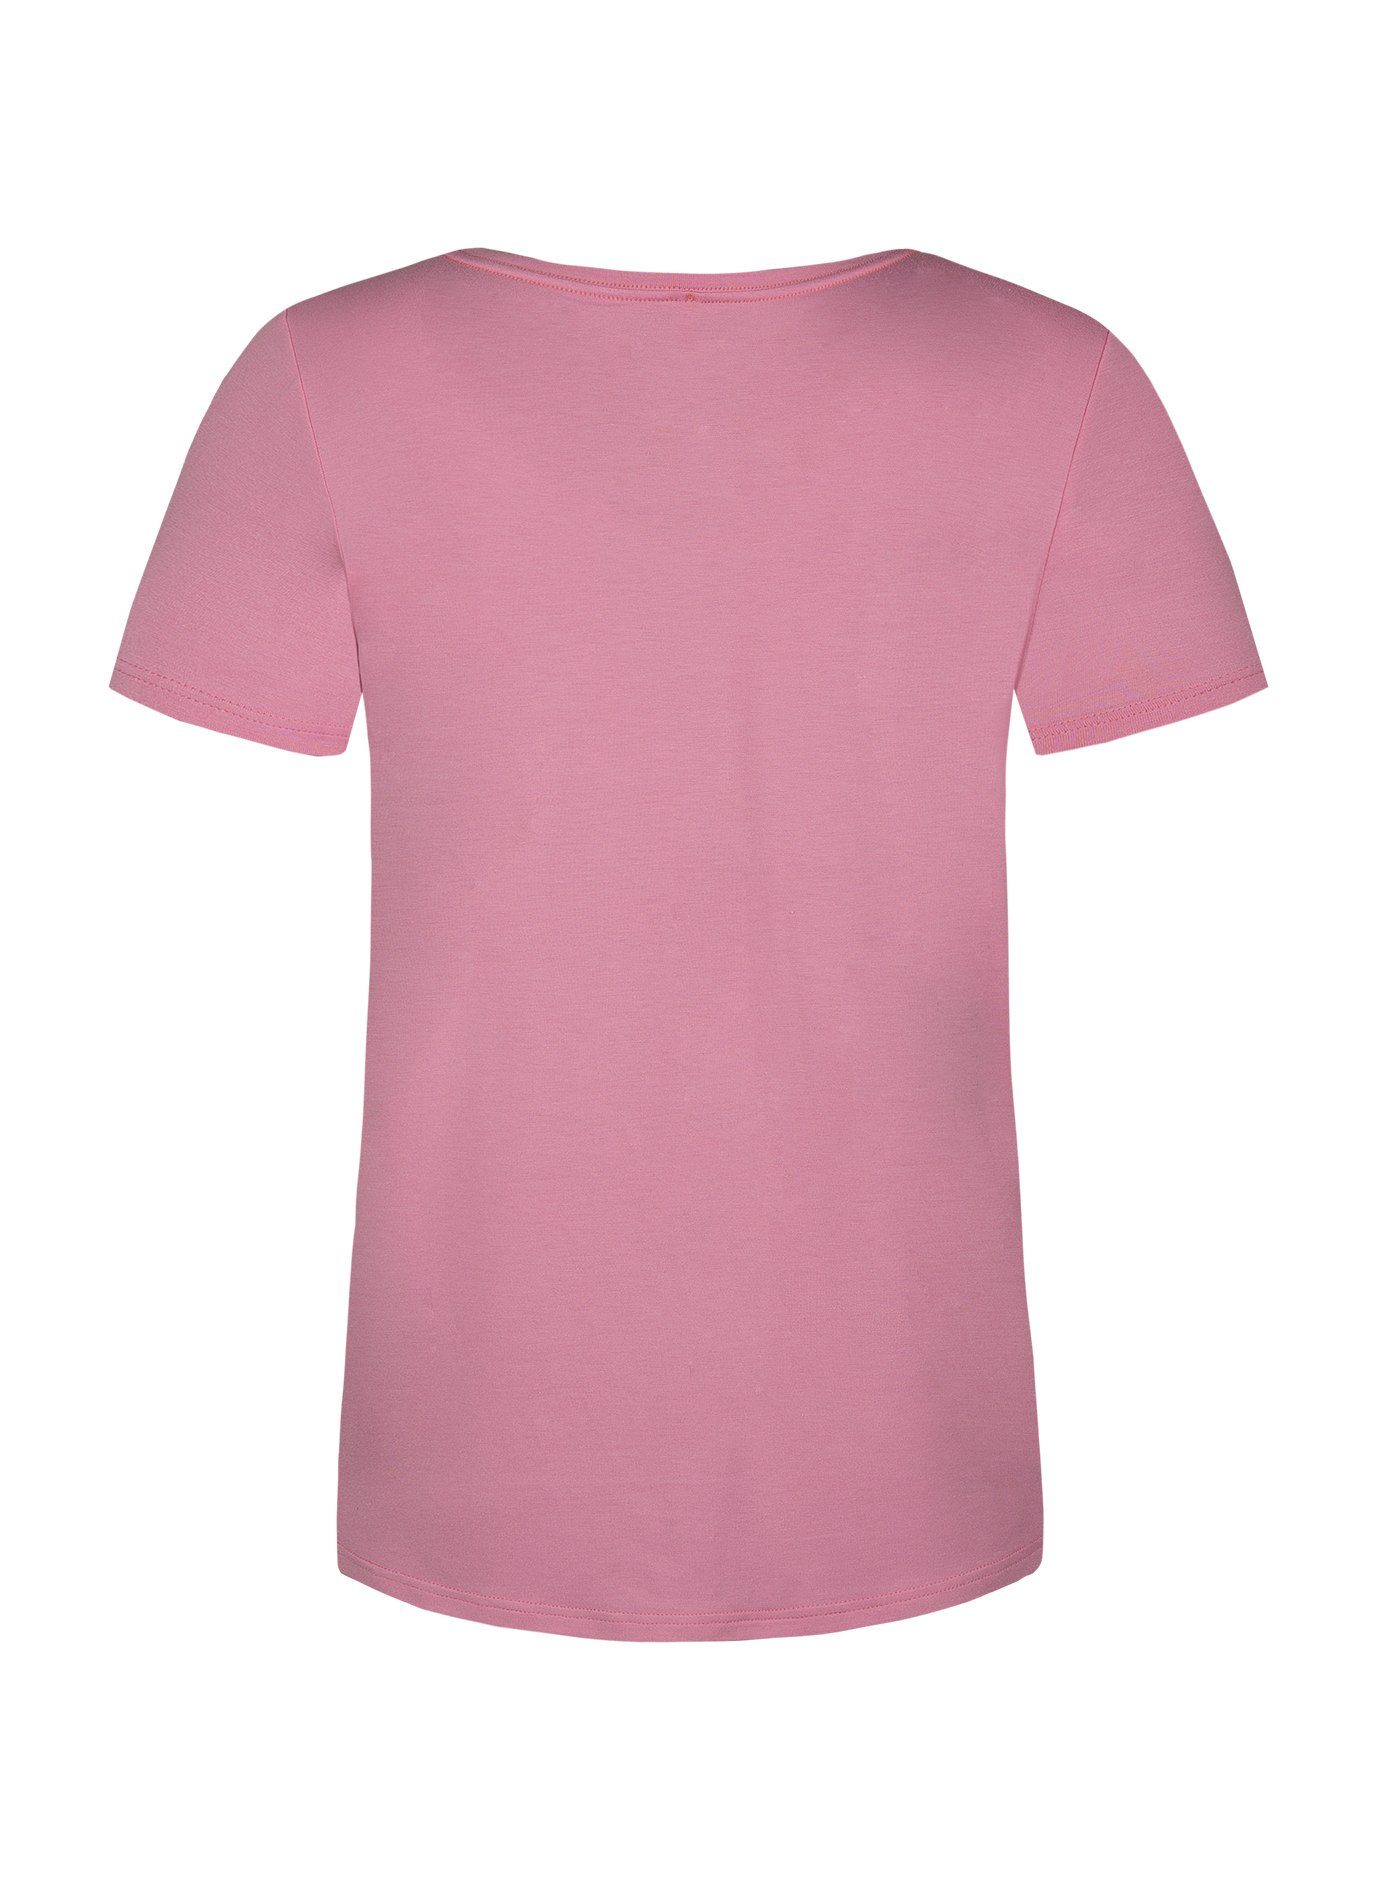 Short Stories Pyjamaoberteil soft 621334 pink STORIES Shirt SHORT